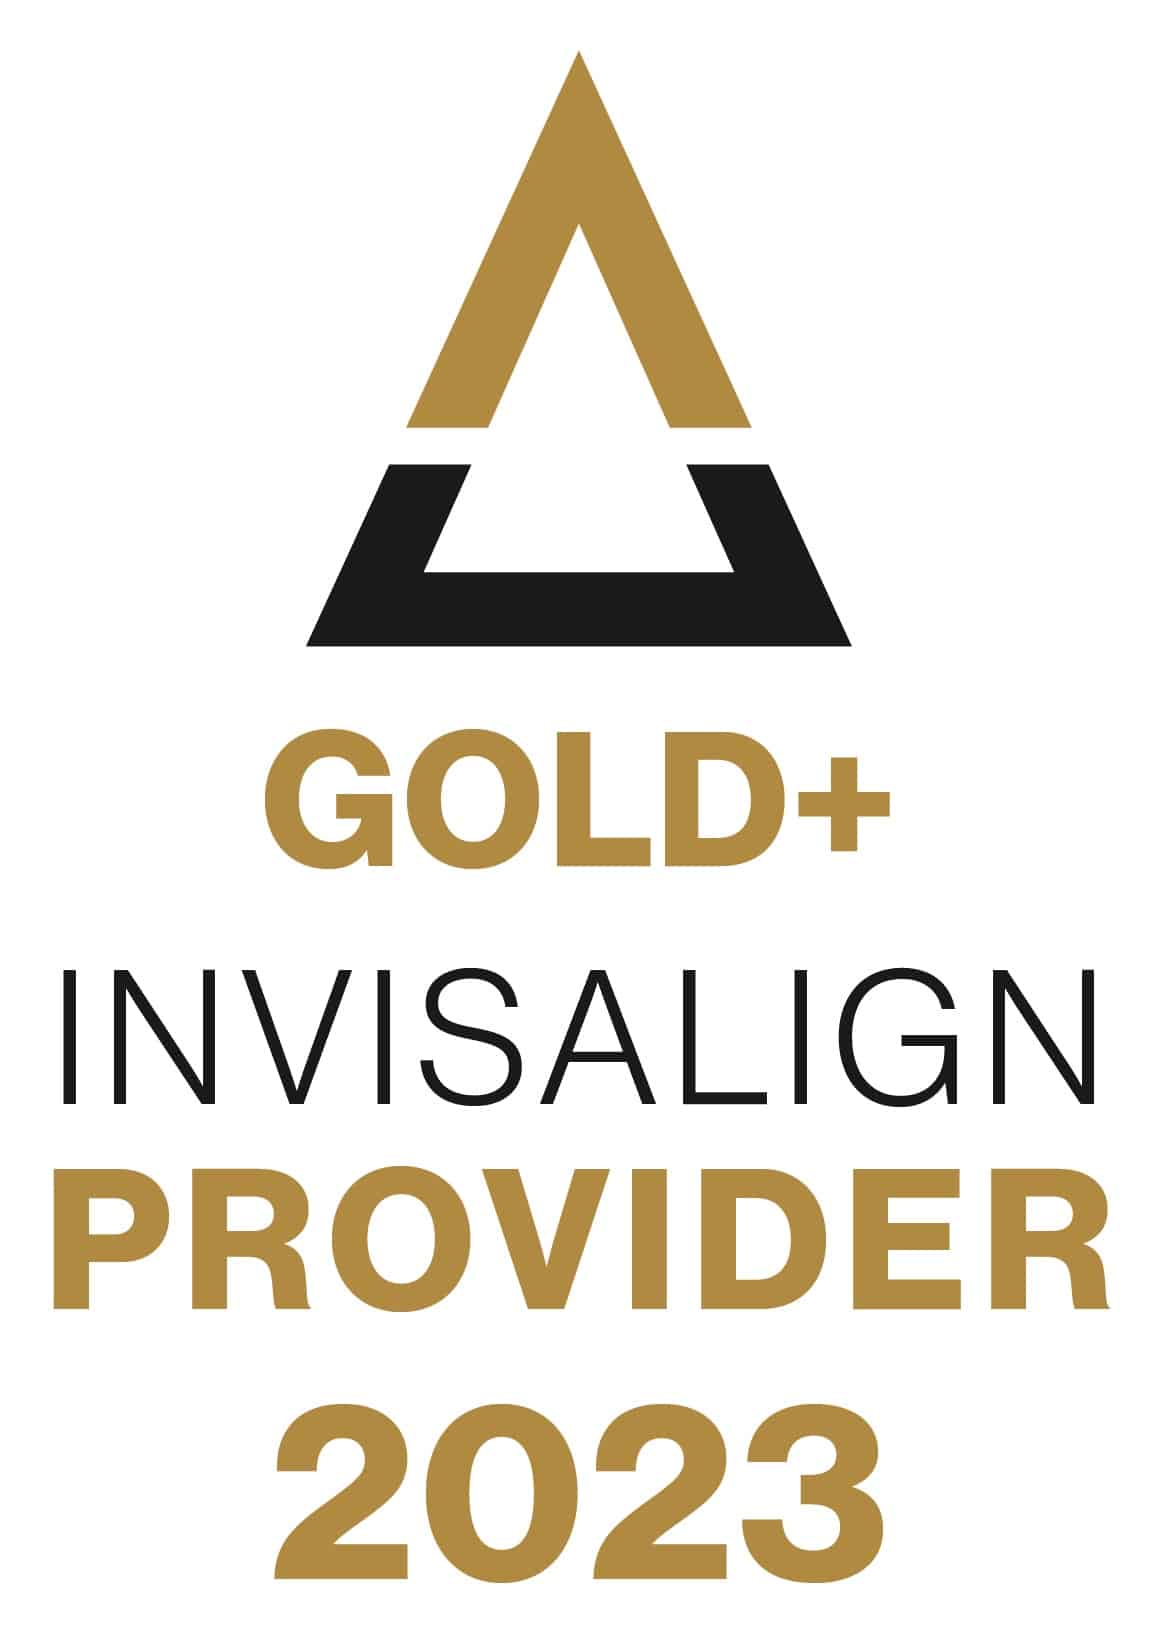 Smile Vegas Dental gold standard Invisalign provider in 2023